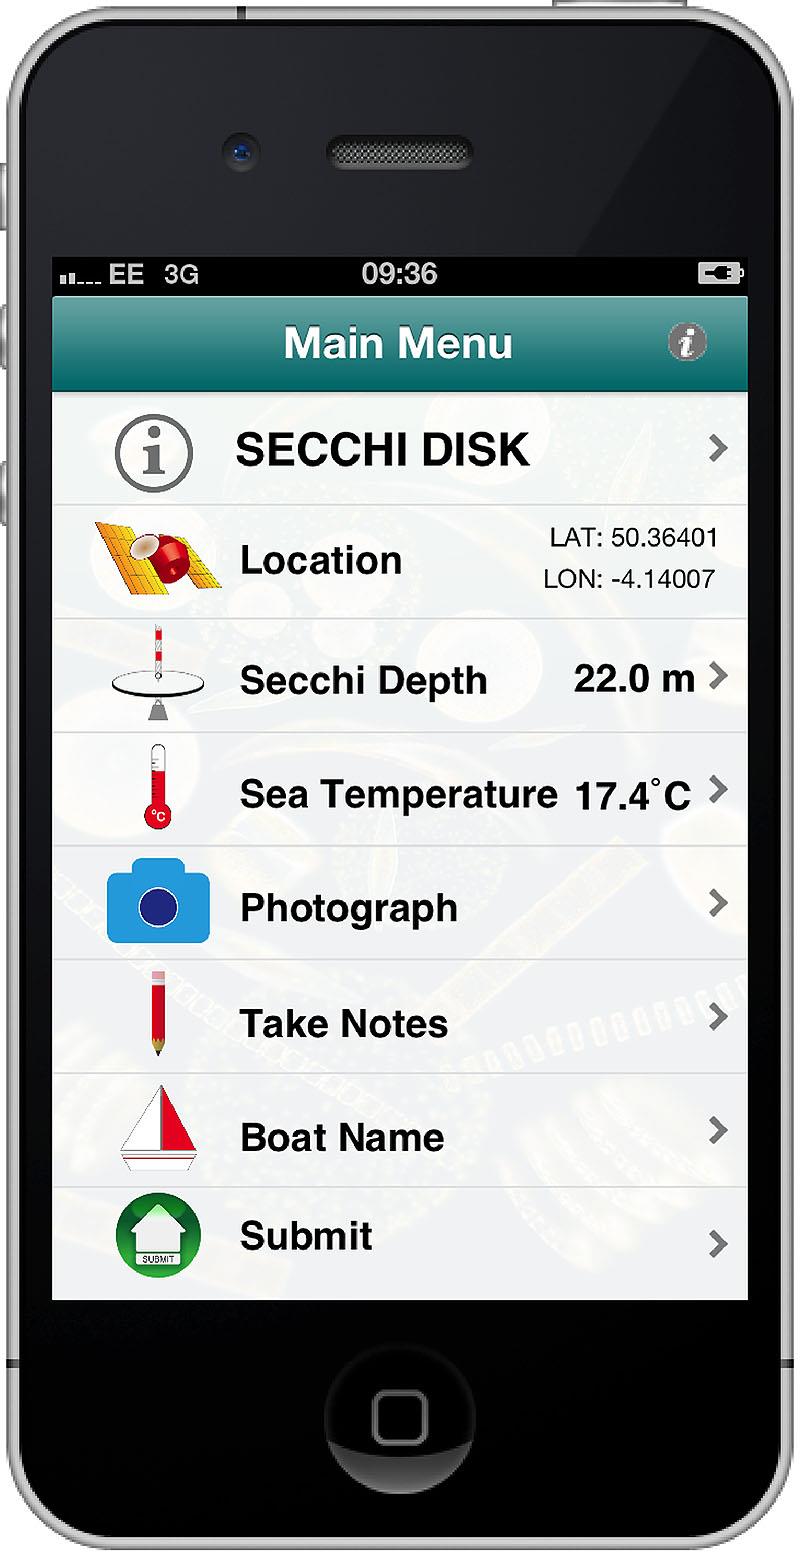 Main Menu of the Secchi App photo copyright Secchi Disk Study taken at 